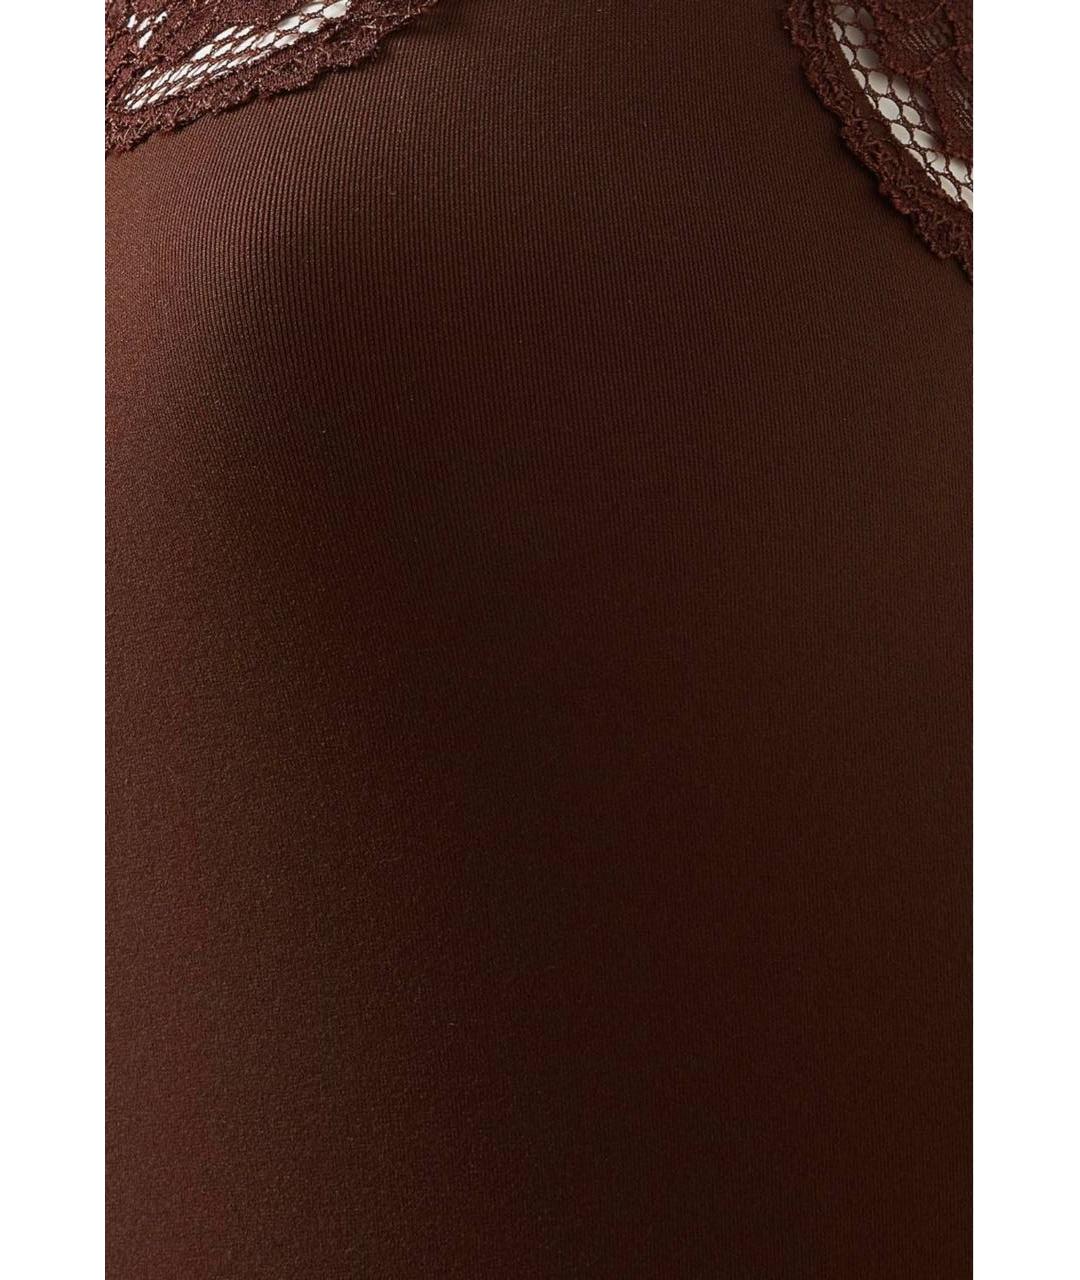 Skims Kim K Women's Ultra Fine Mesh Bodysuit Size 4X Color Chili  BS-BDY-2014 NWT 